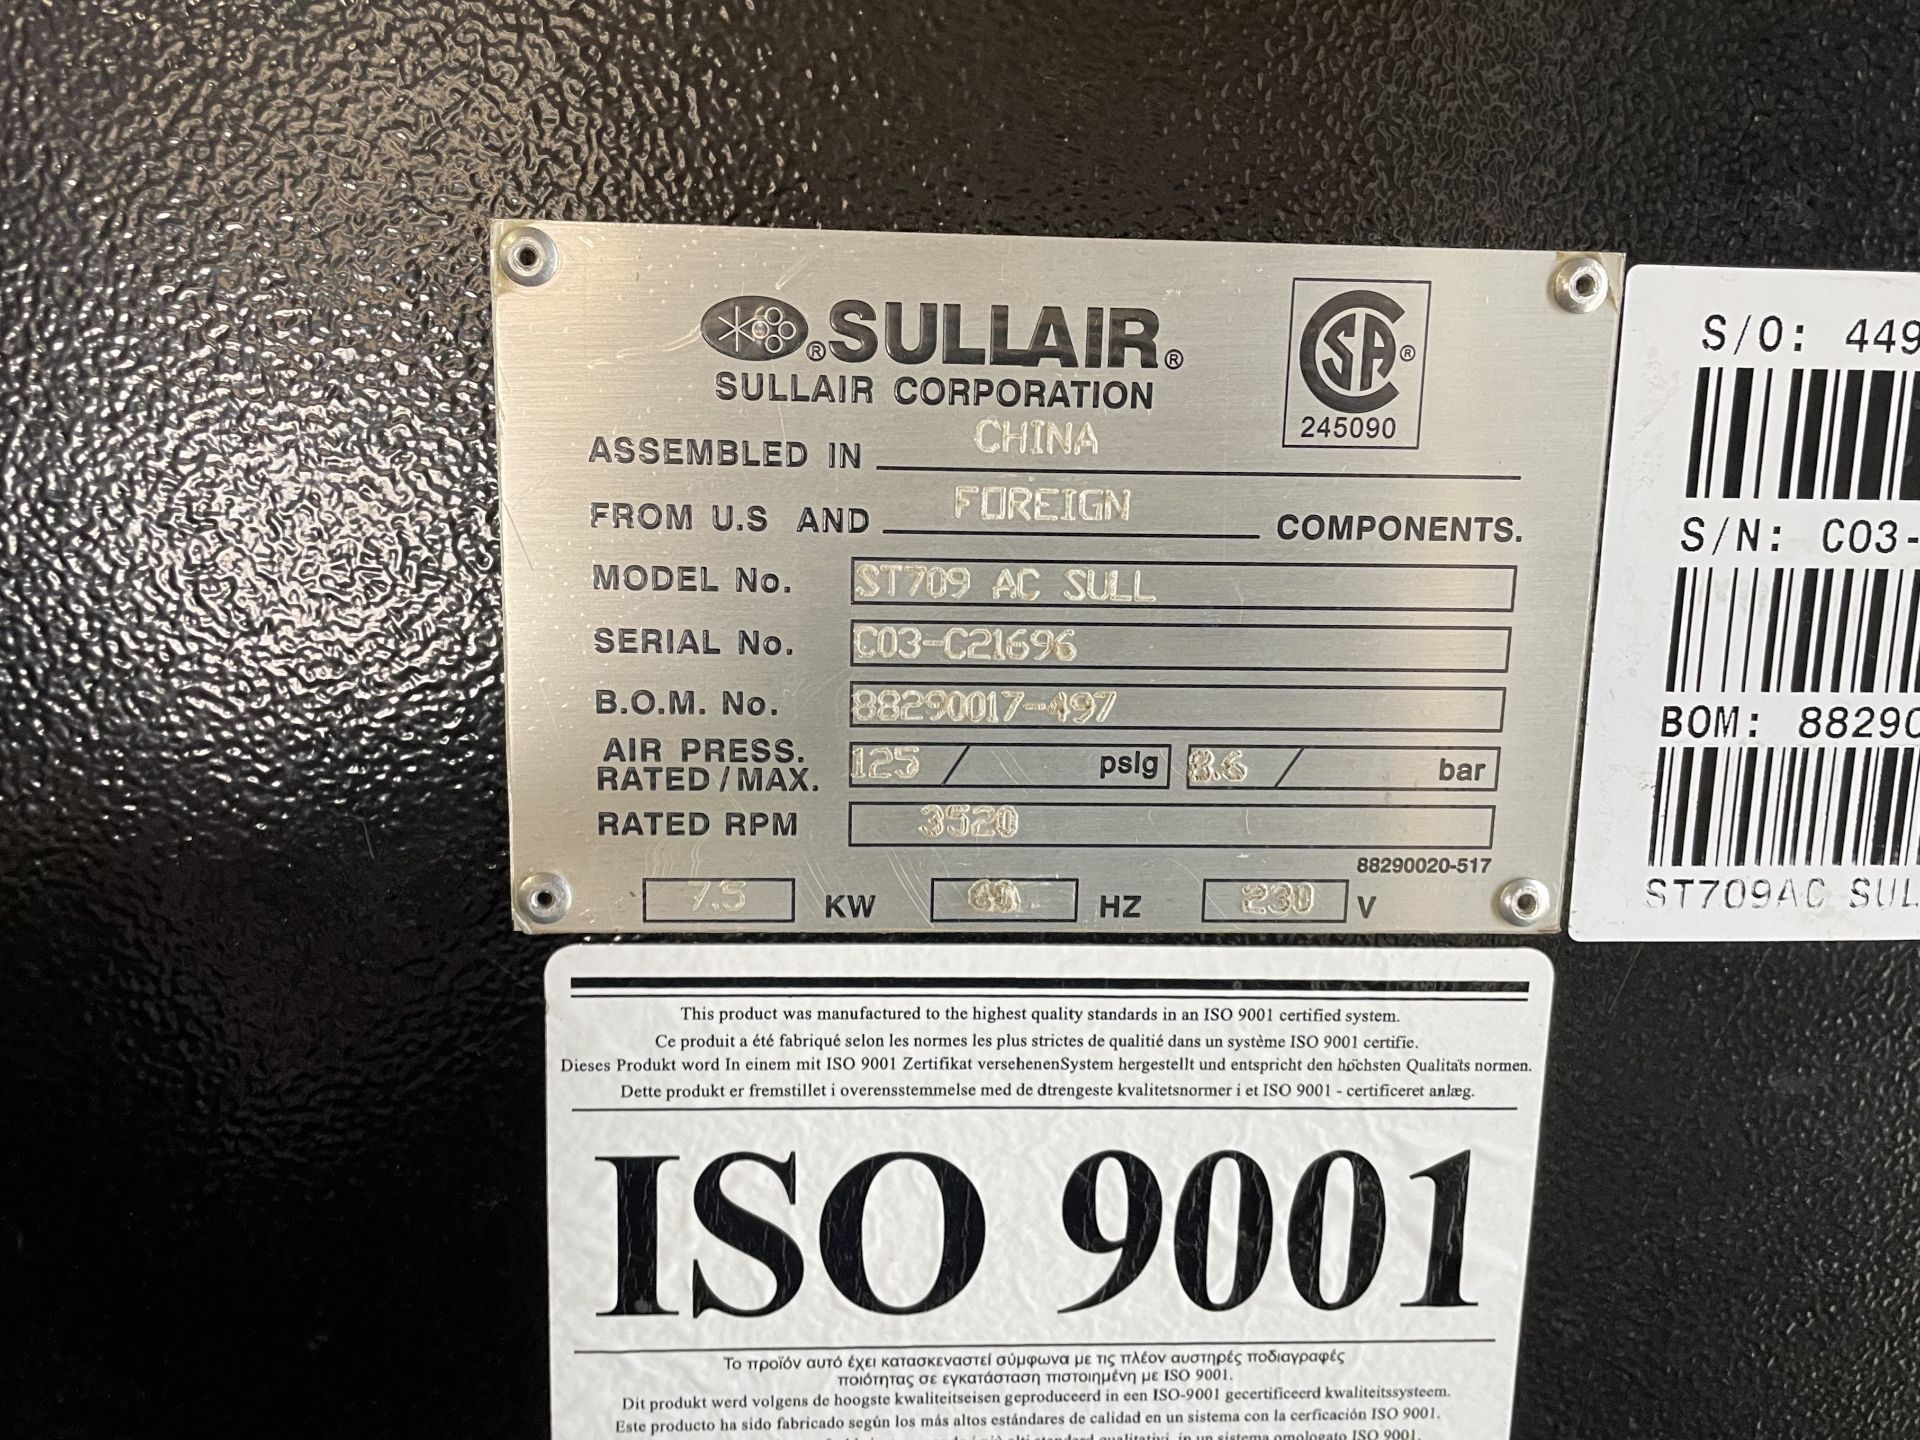 Sullair ShopTek ST709 AC Sull Rotary Screw Air Compressor - Image 5 of 7